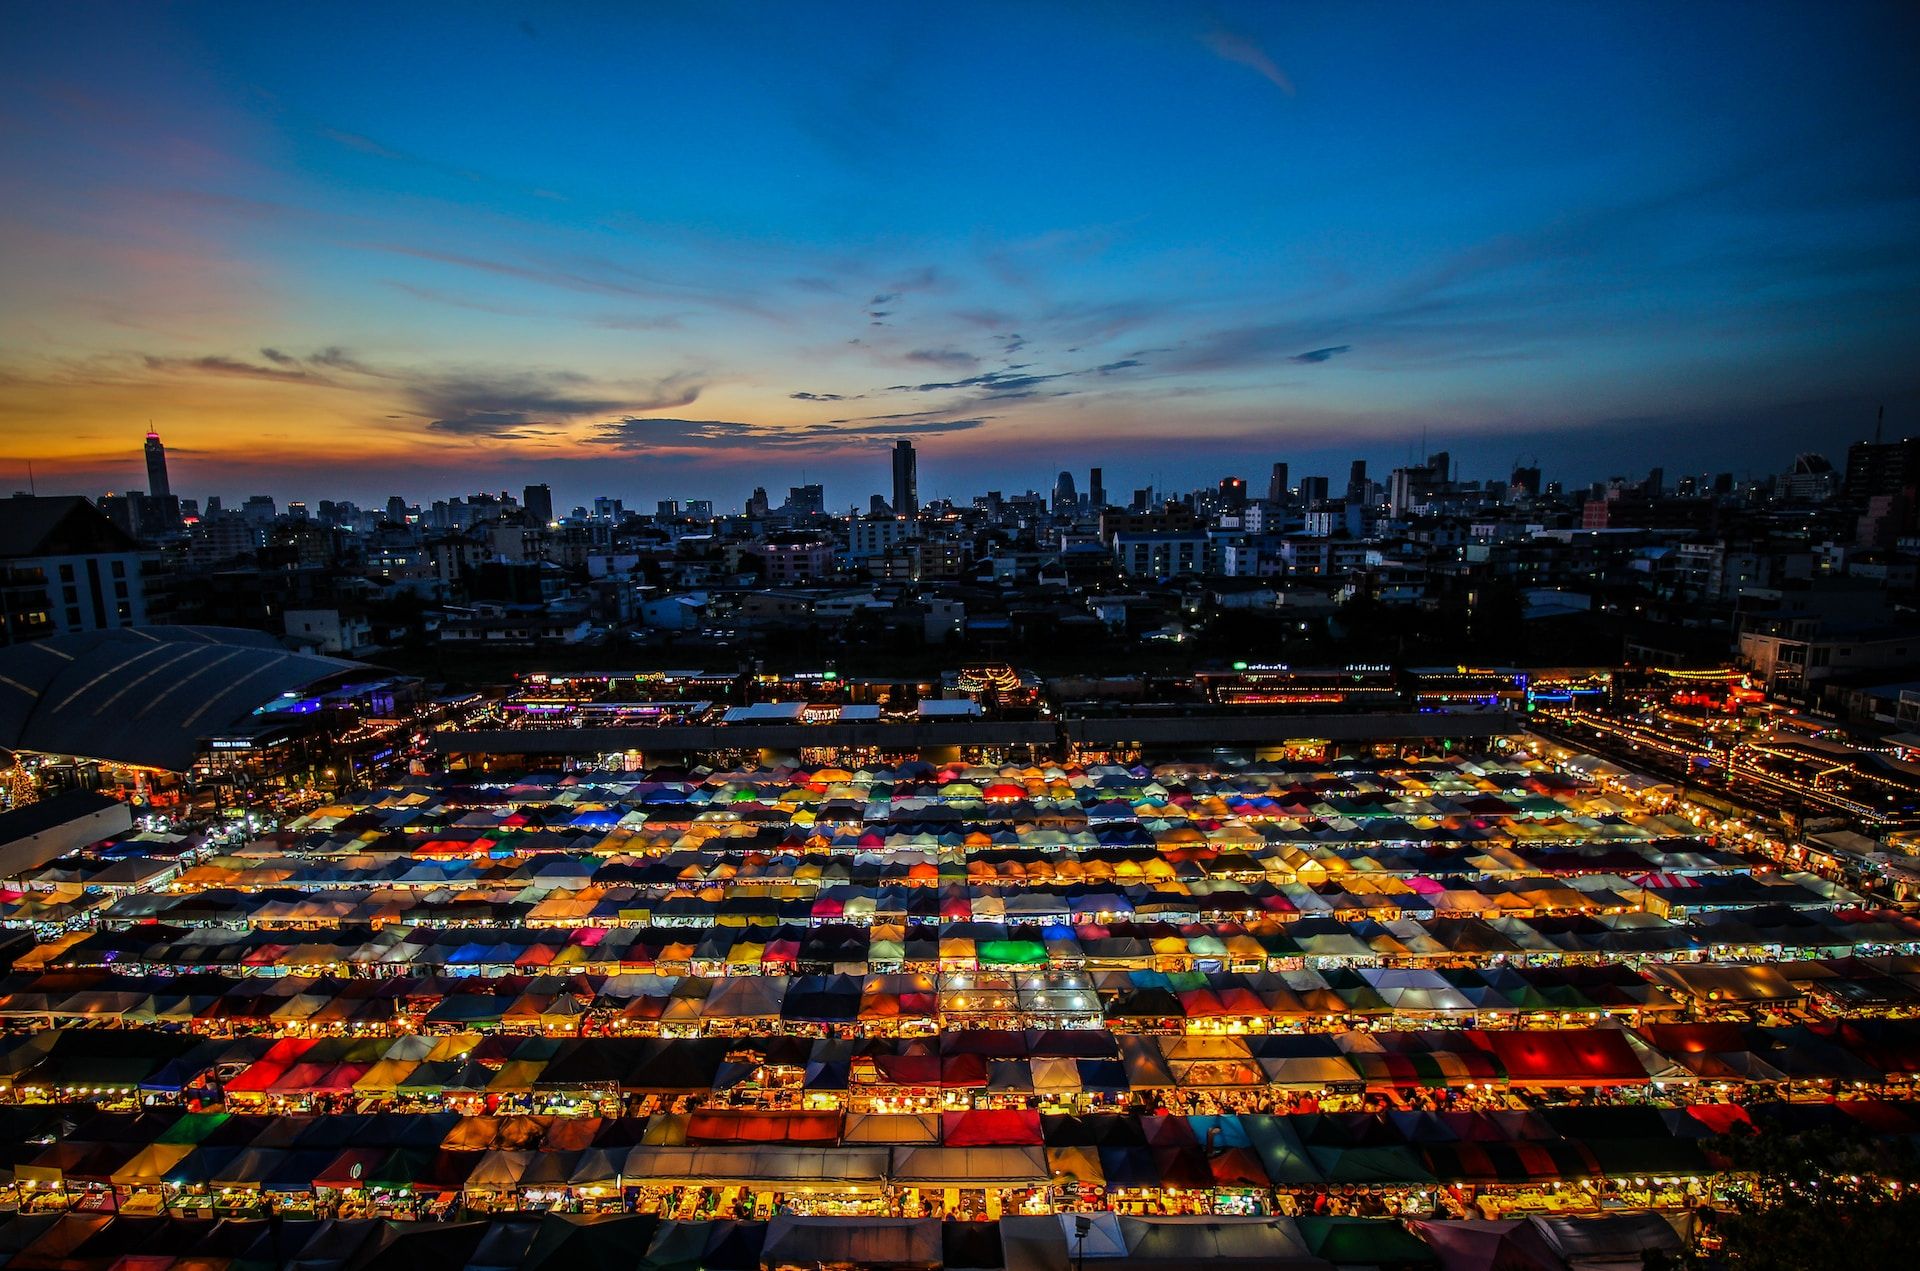 An evening market in Bangkok, Thailand